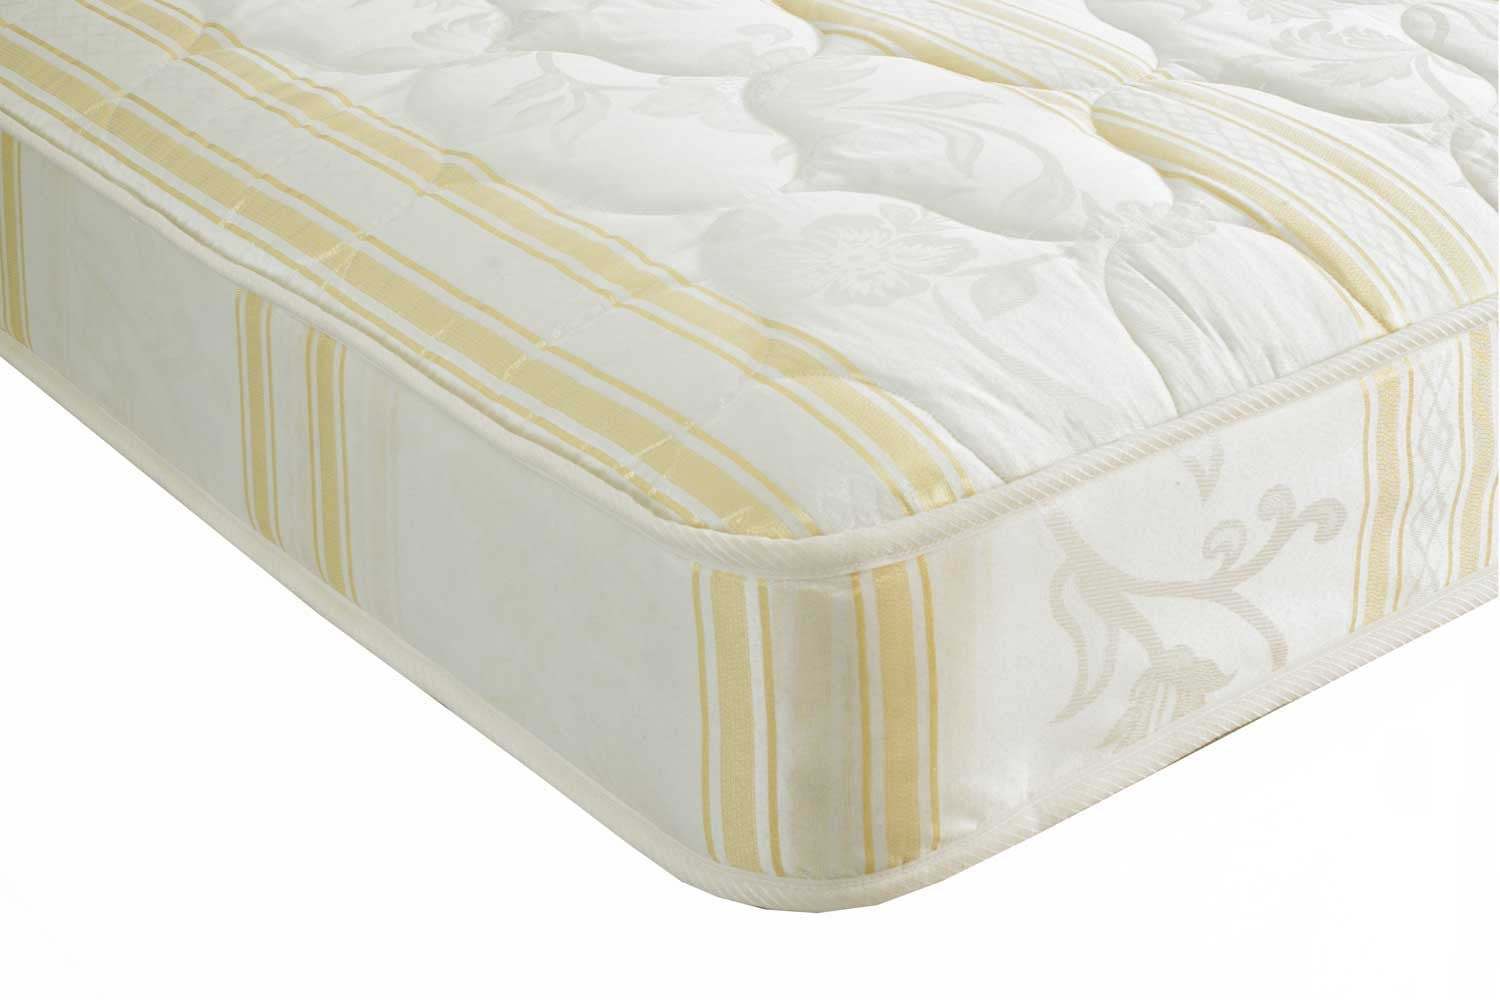 crown posture kingdom mattress review